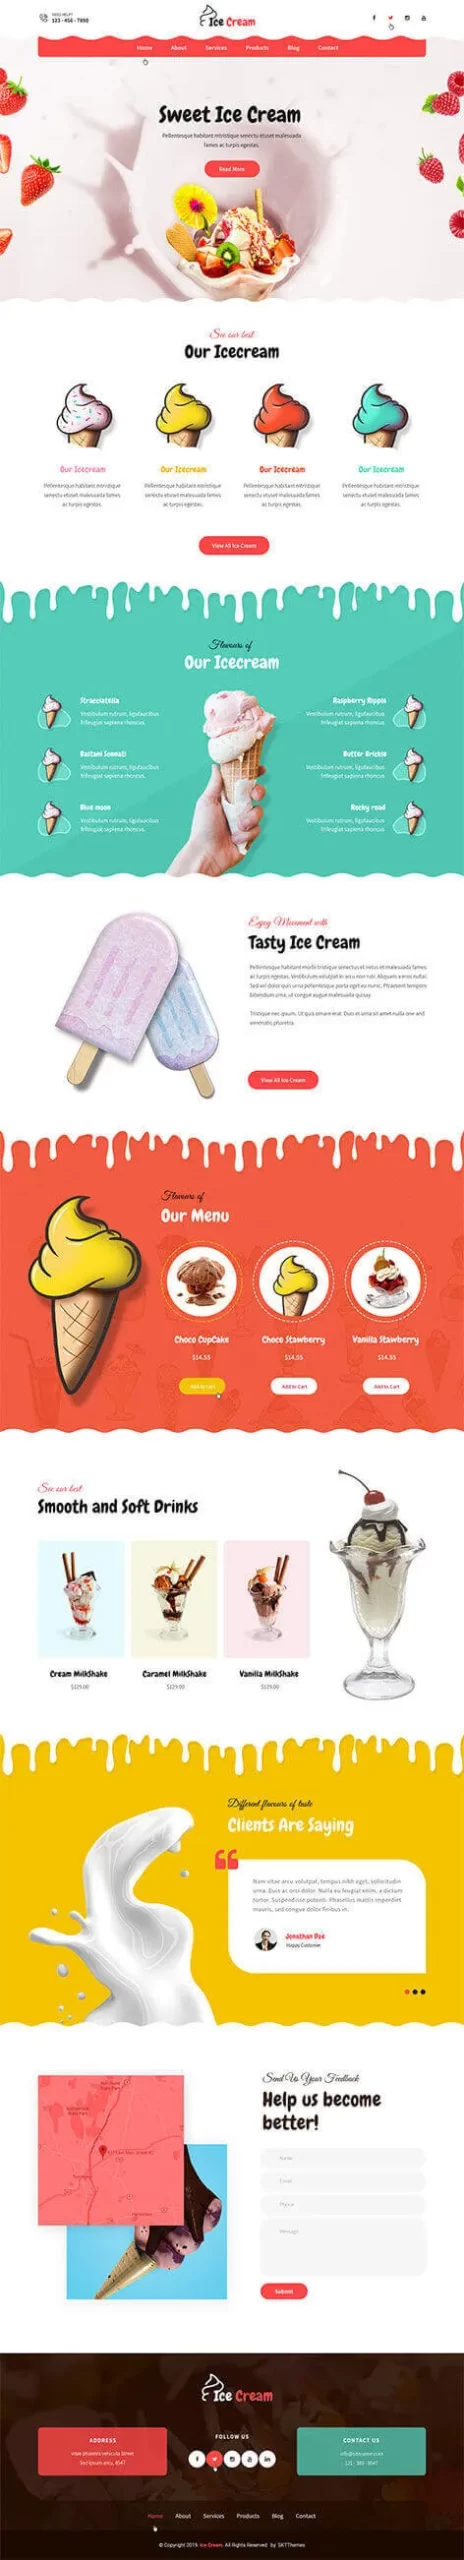 Ice Cream Parlor WordPress Theme